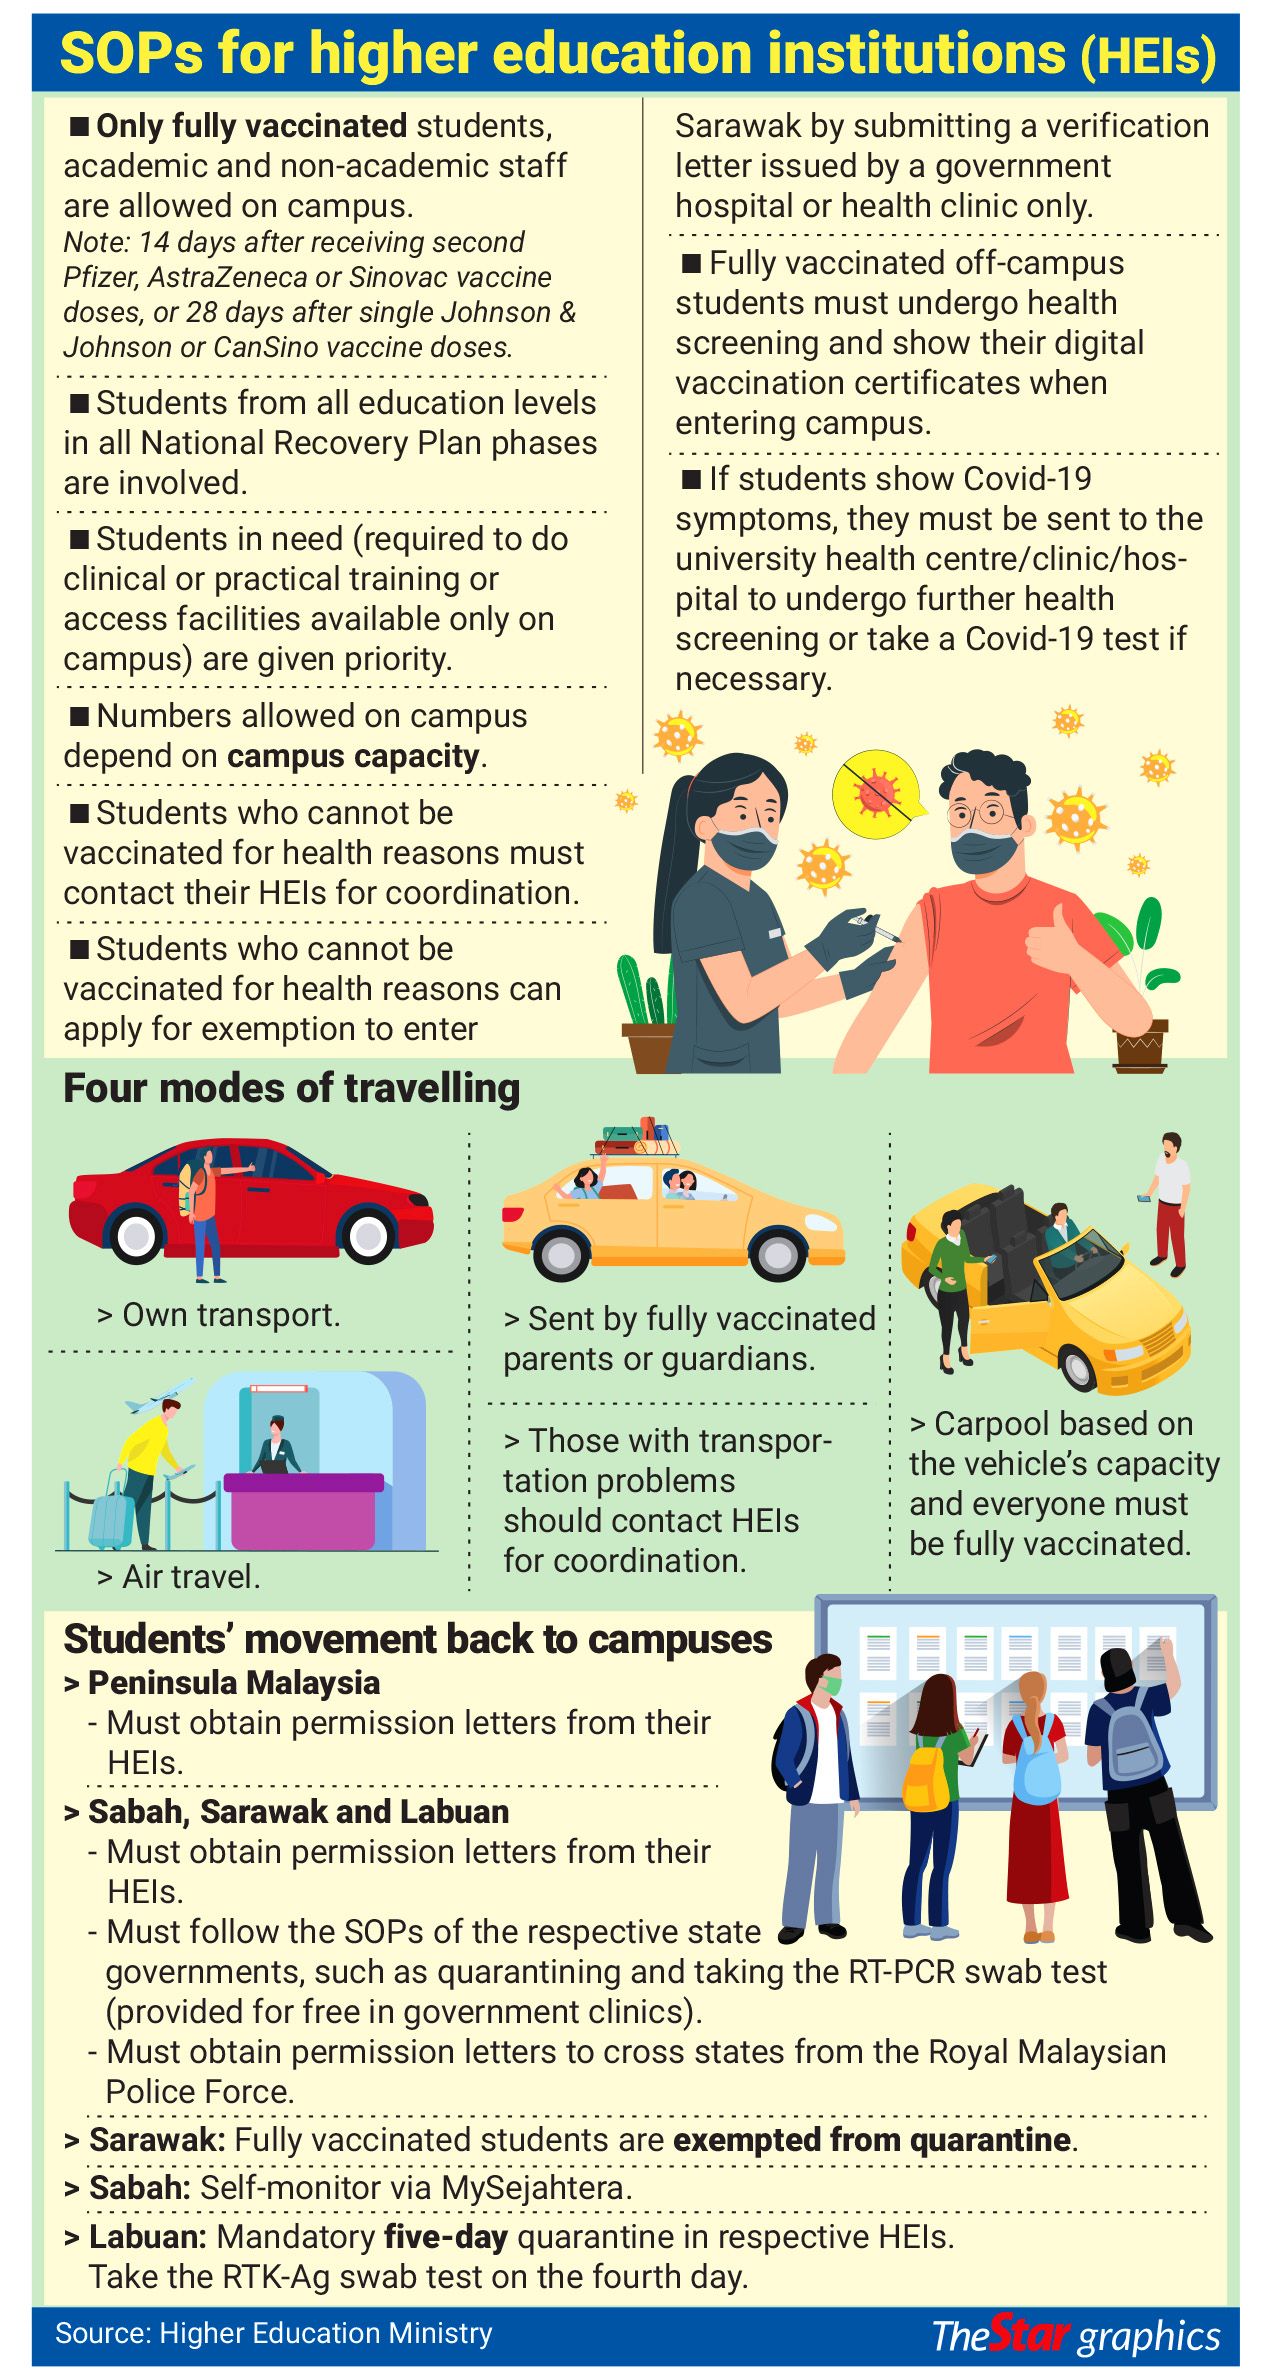 Mental health test malaysia